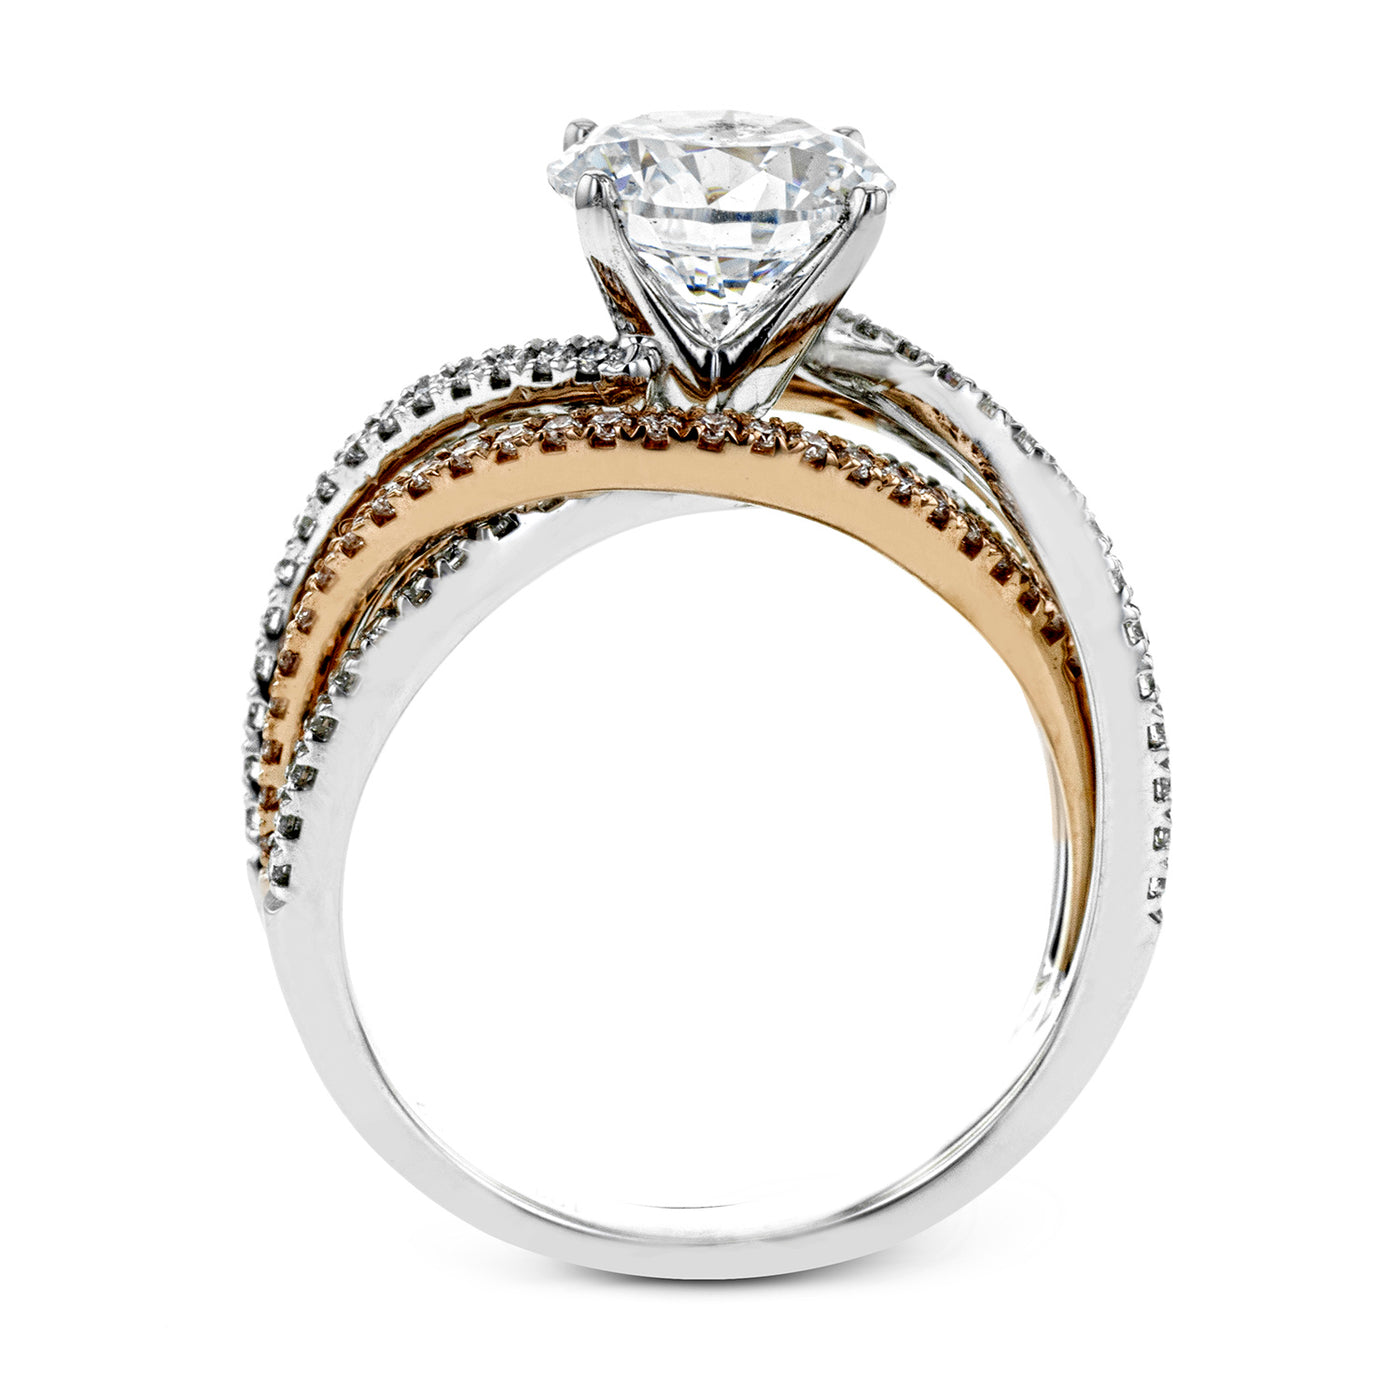 Simon G 18k White & Rose Gold Round Contemporary Diamond Semi-Mount Engagement Ring – LR2125